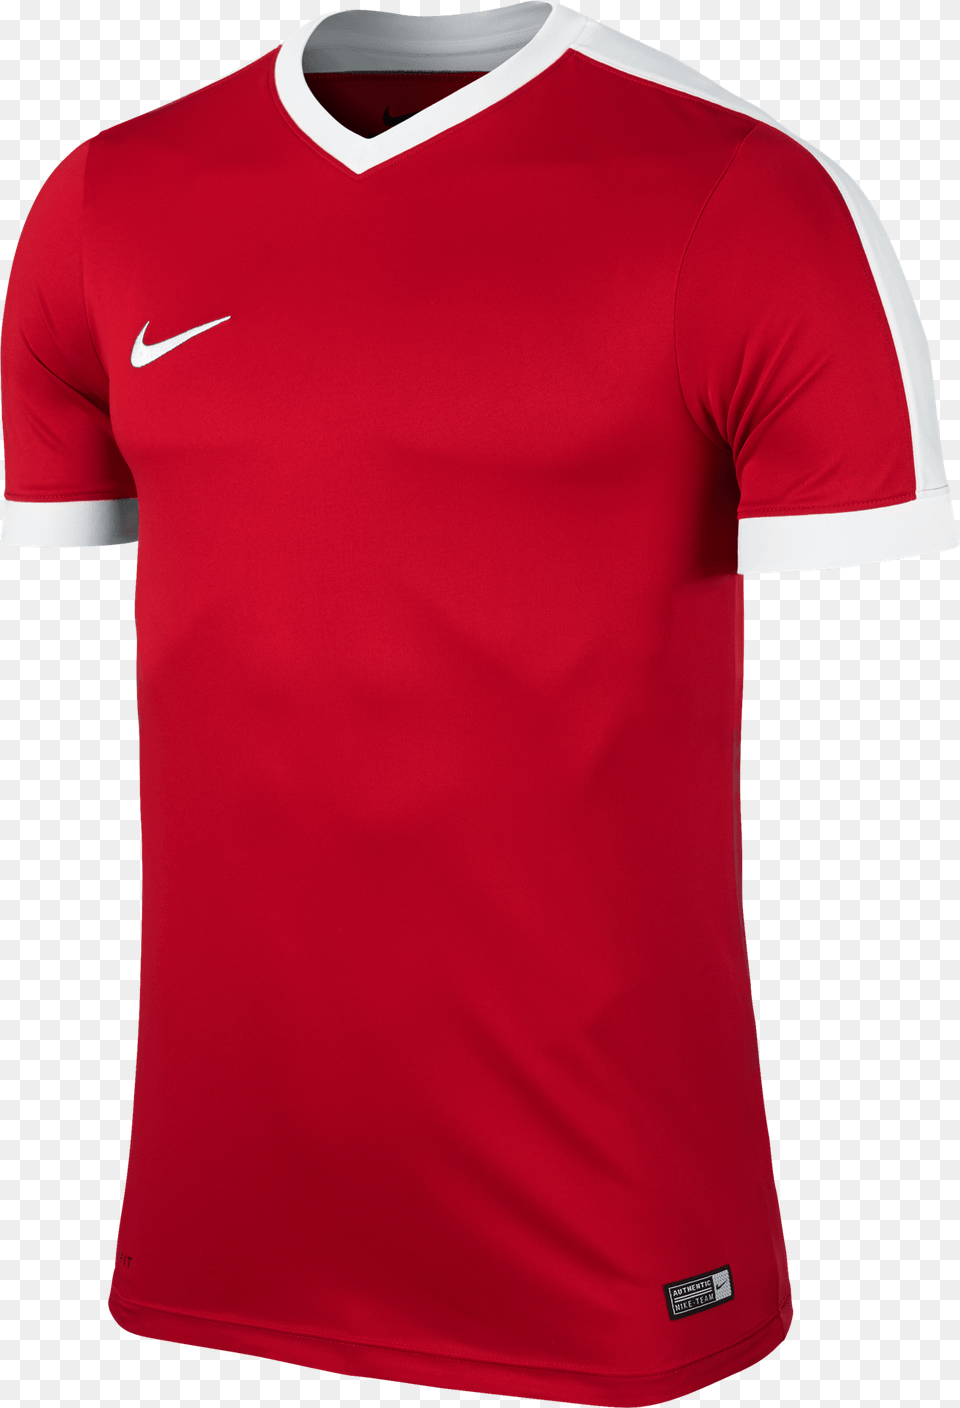 Nike Striker Iv Short Sleeve Jersey Nike Striker Iv Jersey, Clothing, Shirt, T-shirt Free Png